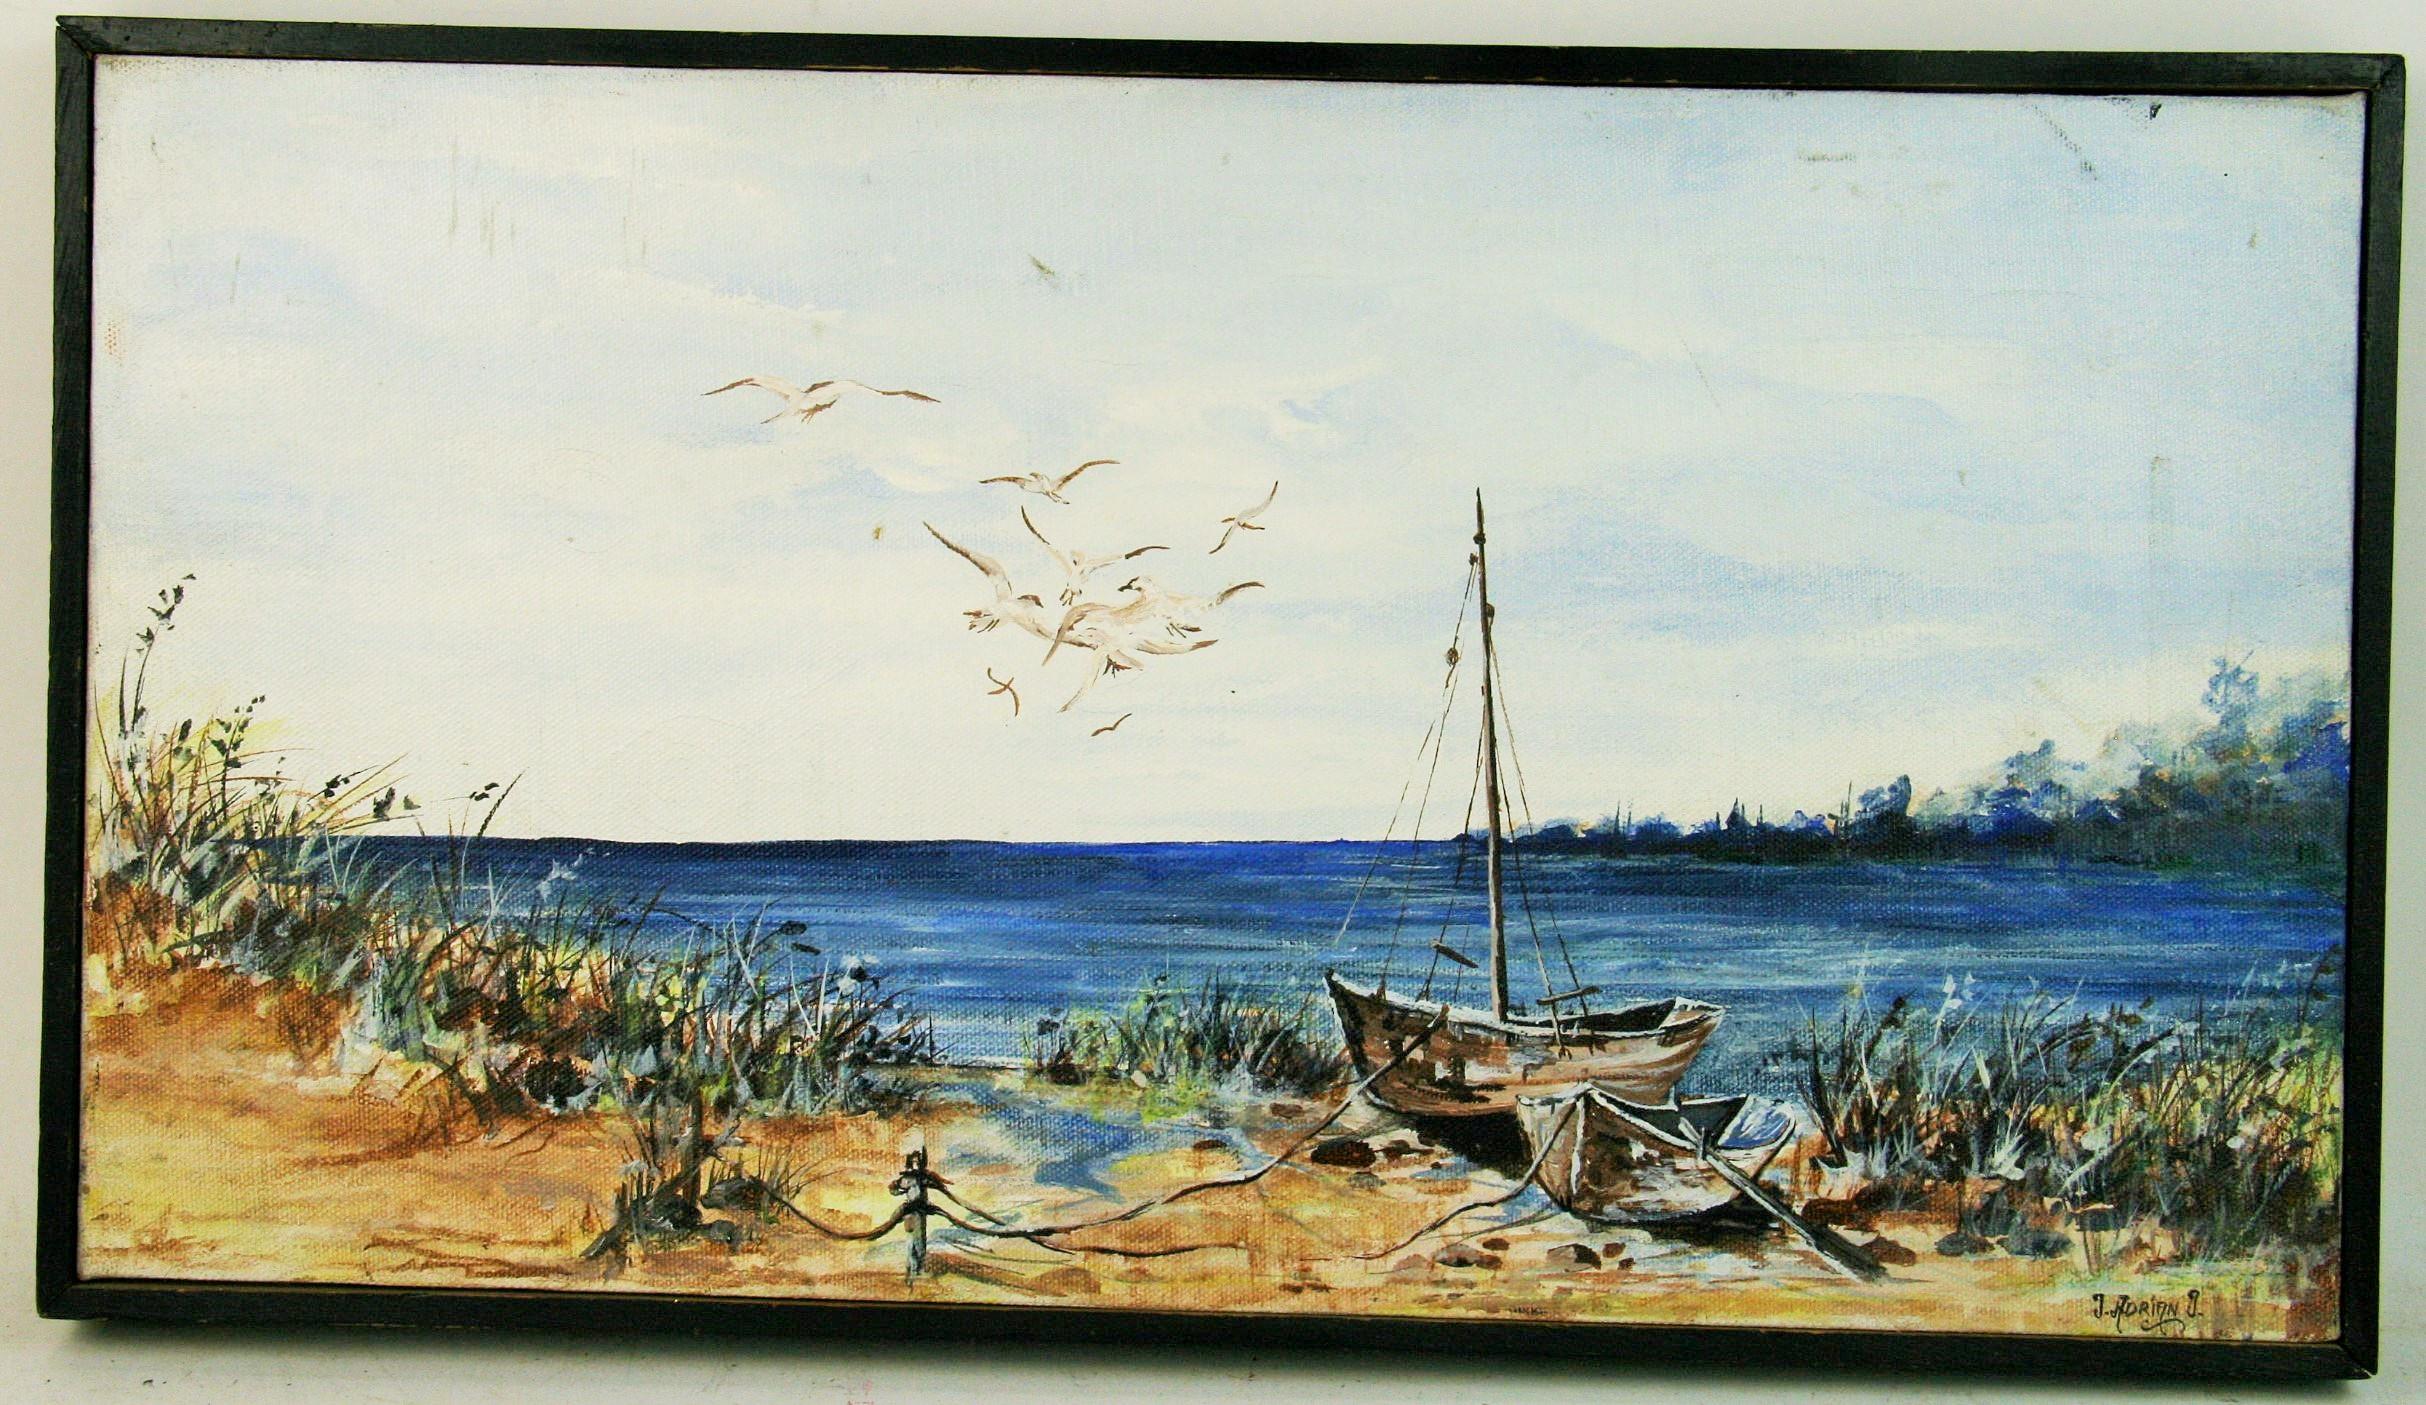 Trevor Adrian Thomas Landscape Painting - Vintage  Coastal Inlet With Sailboats  Seascape Landscape Oil Painting  1970